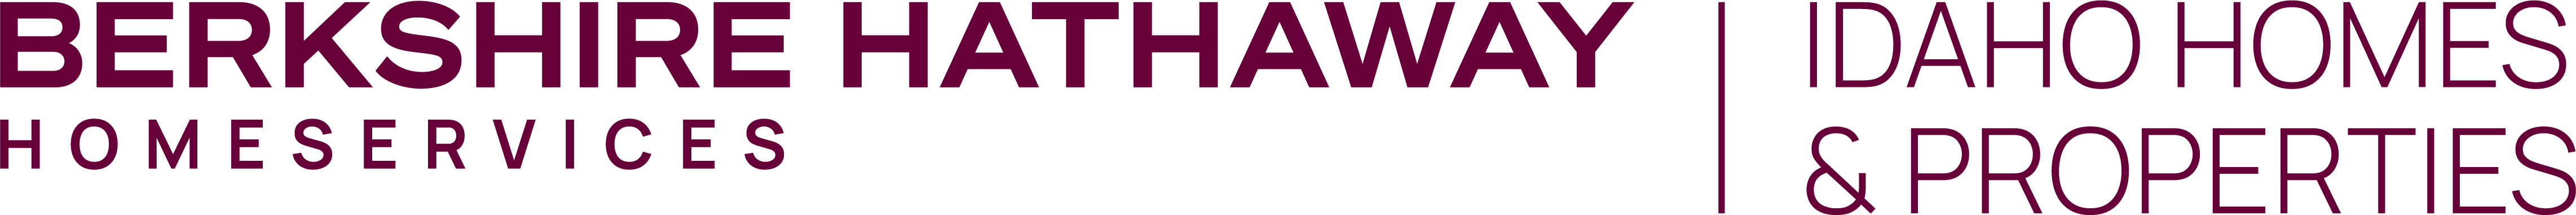 Logo: Berkshire Hathaway Home Service Idaho Homes & Properties